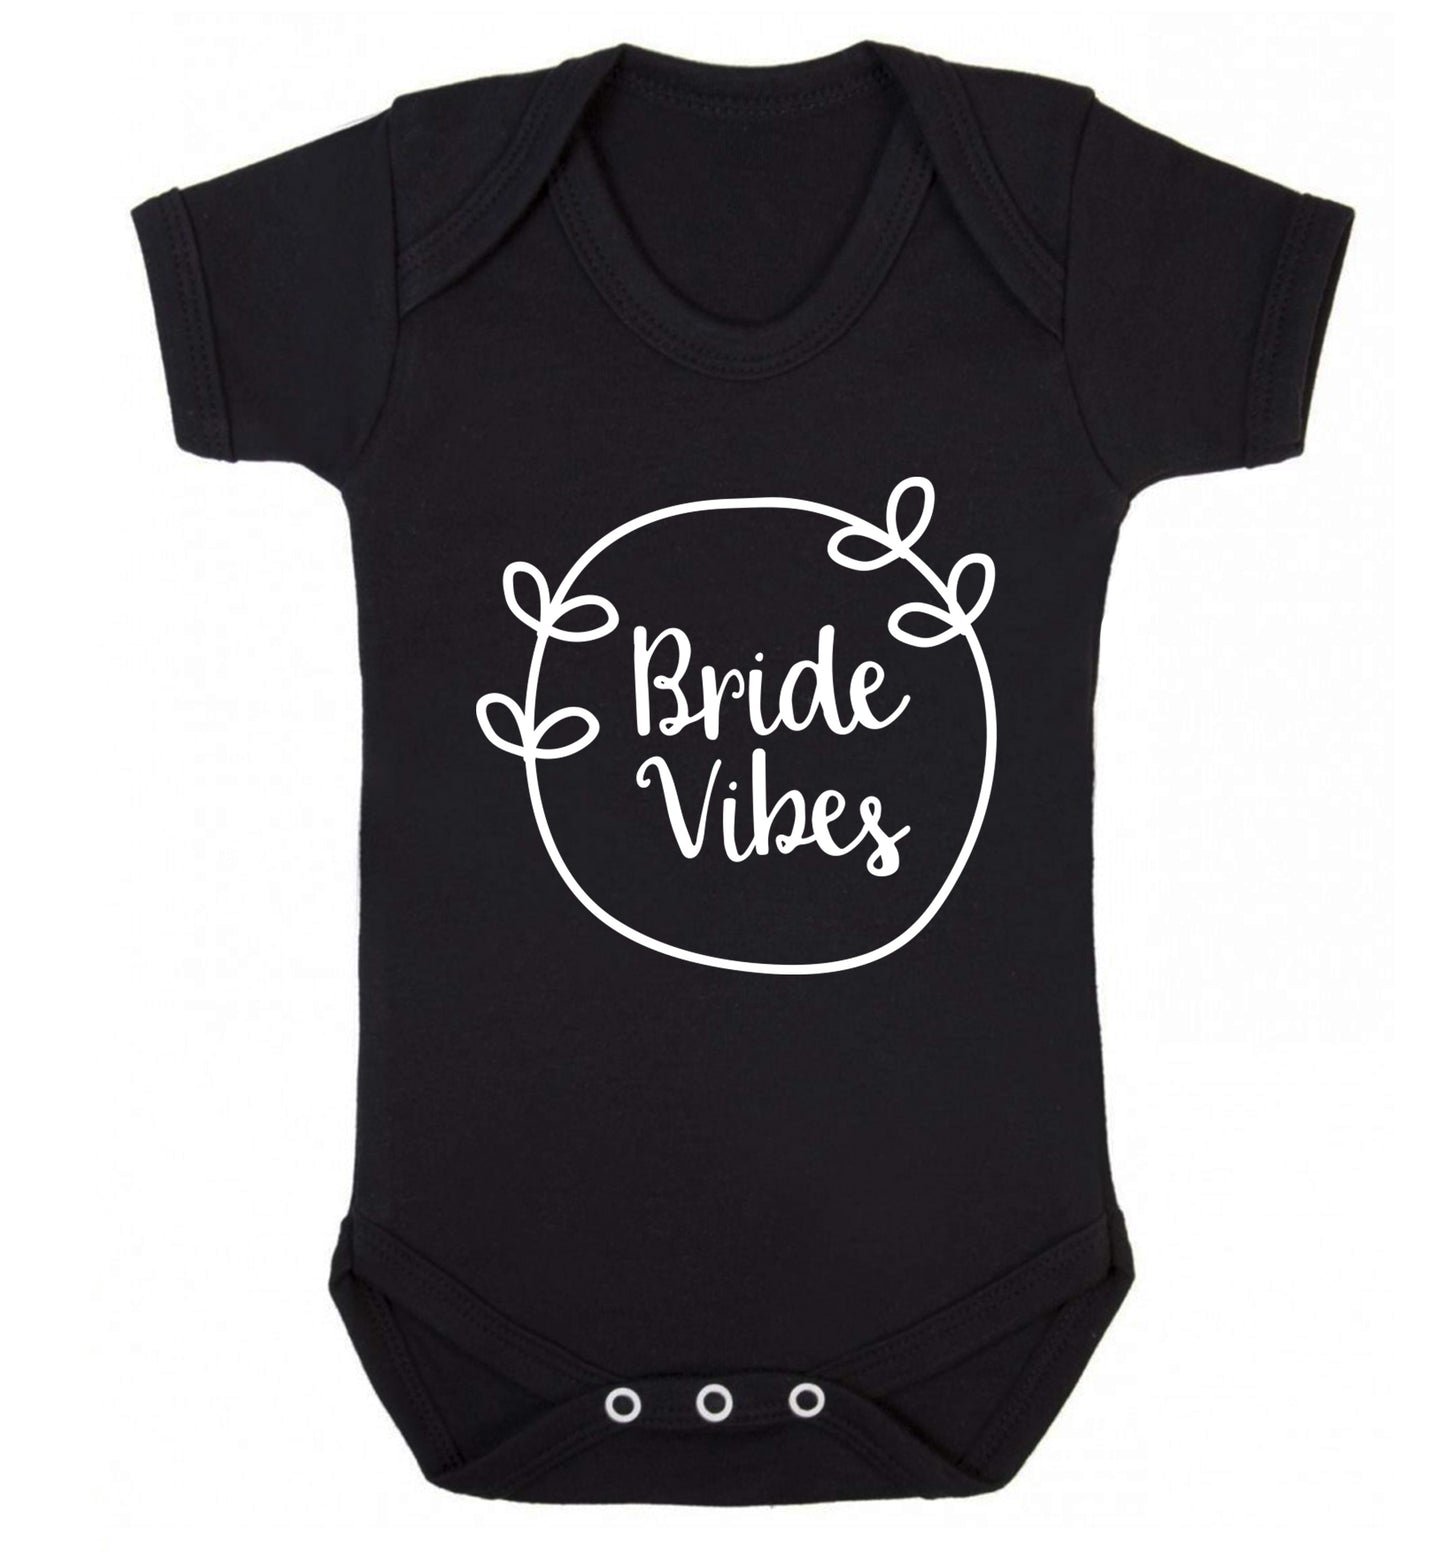 Bride Vibes Baby Vest black 18-24 months